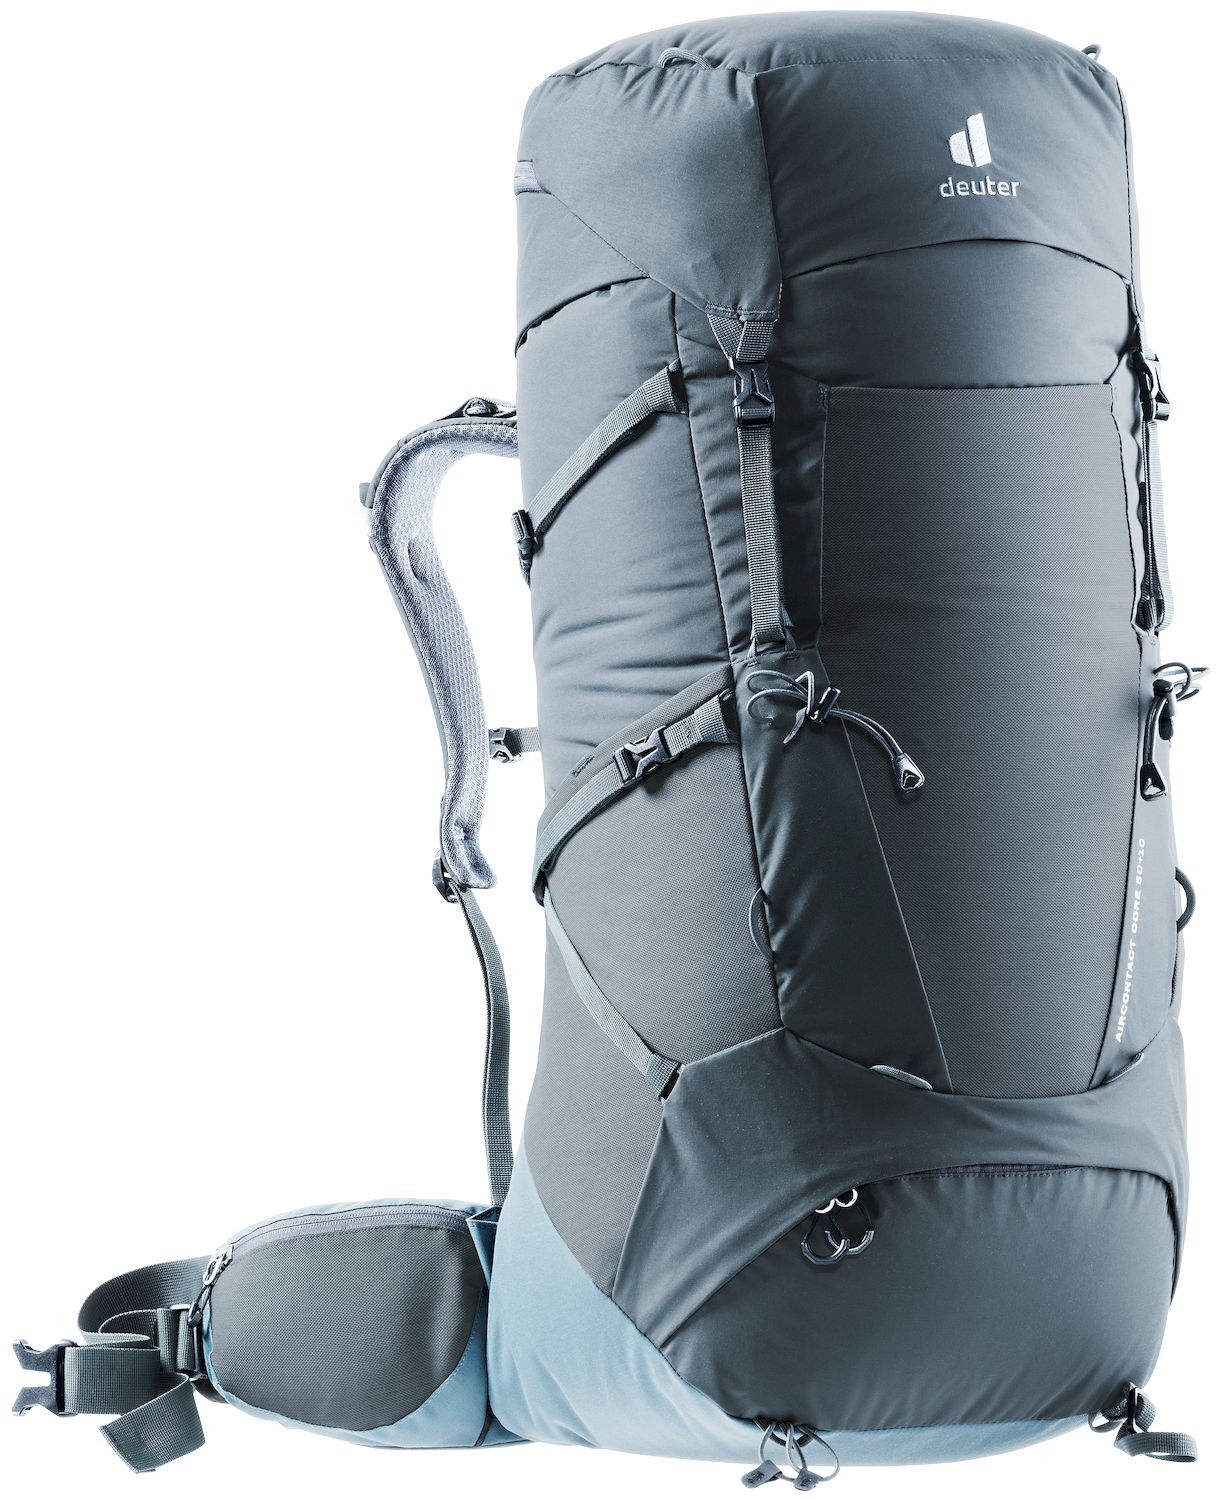 Deuter Aircontact Core 50+10 - Hiking backpack - Men's